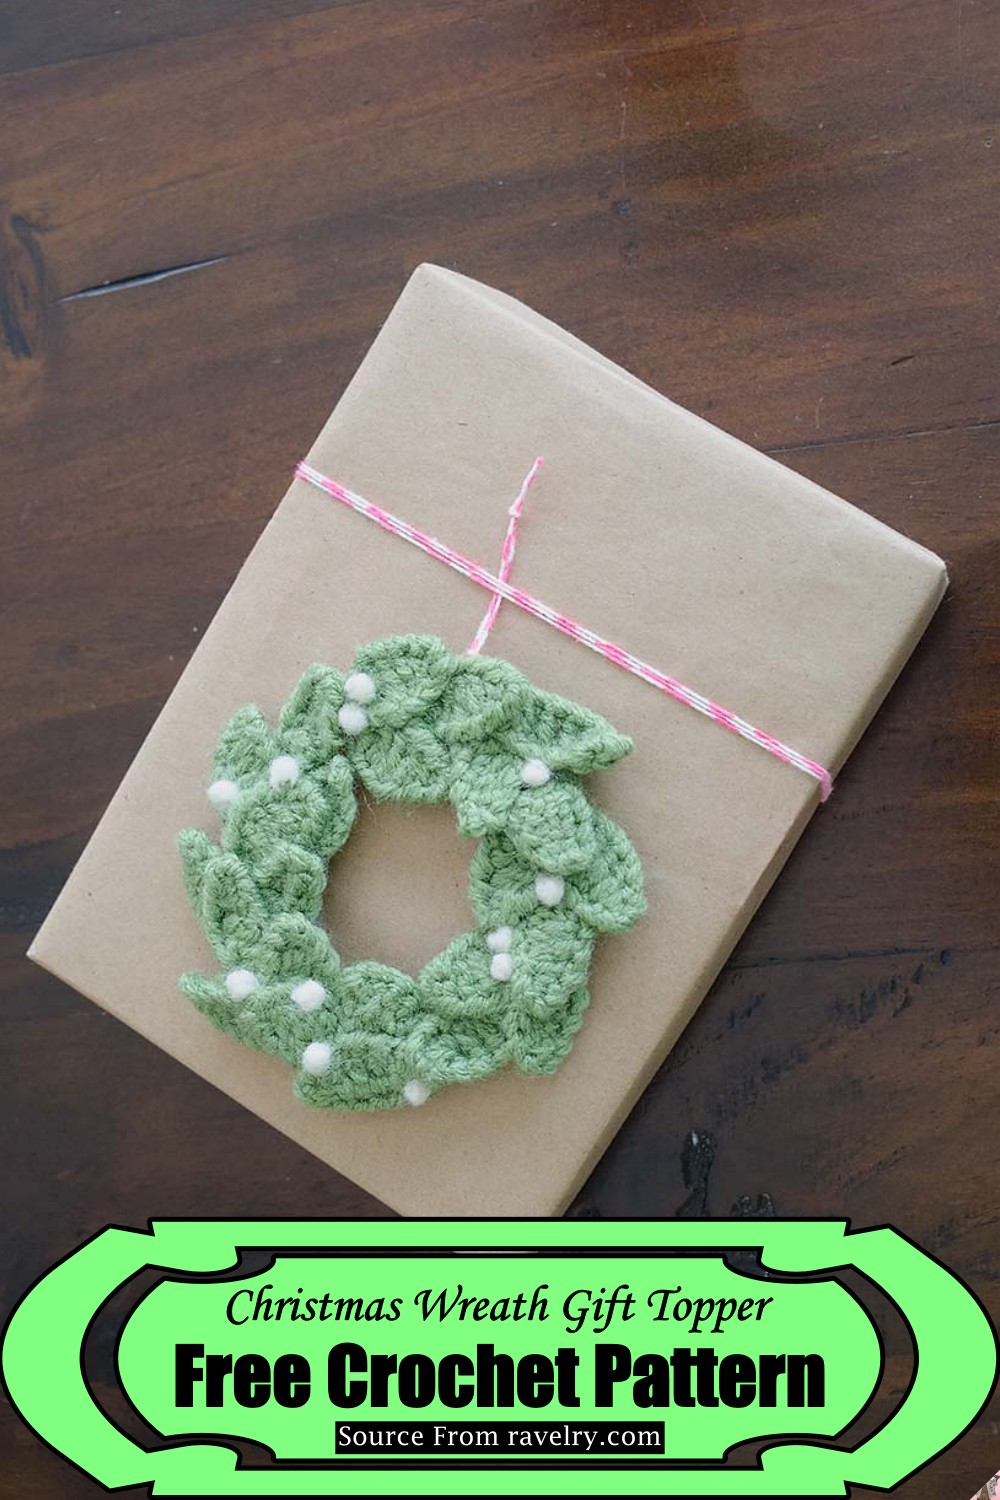 Crochet Christmas Wreath Gift Topper Pattern